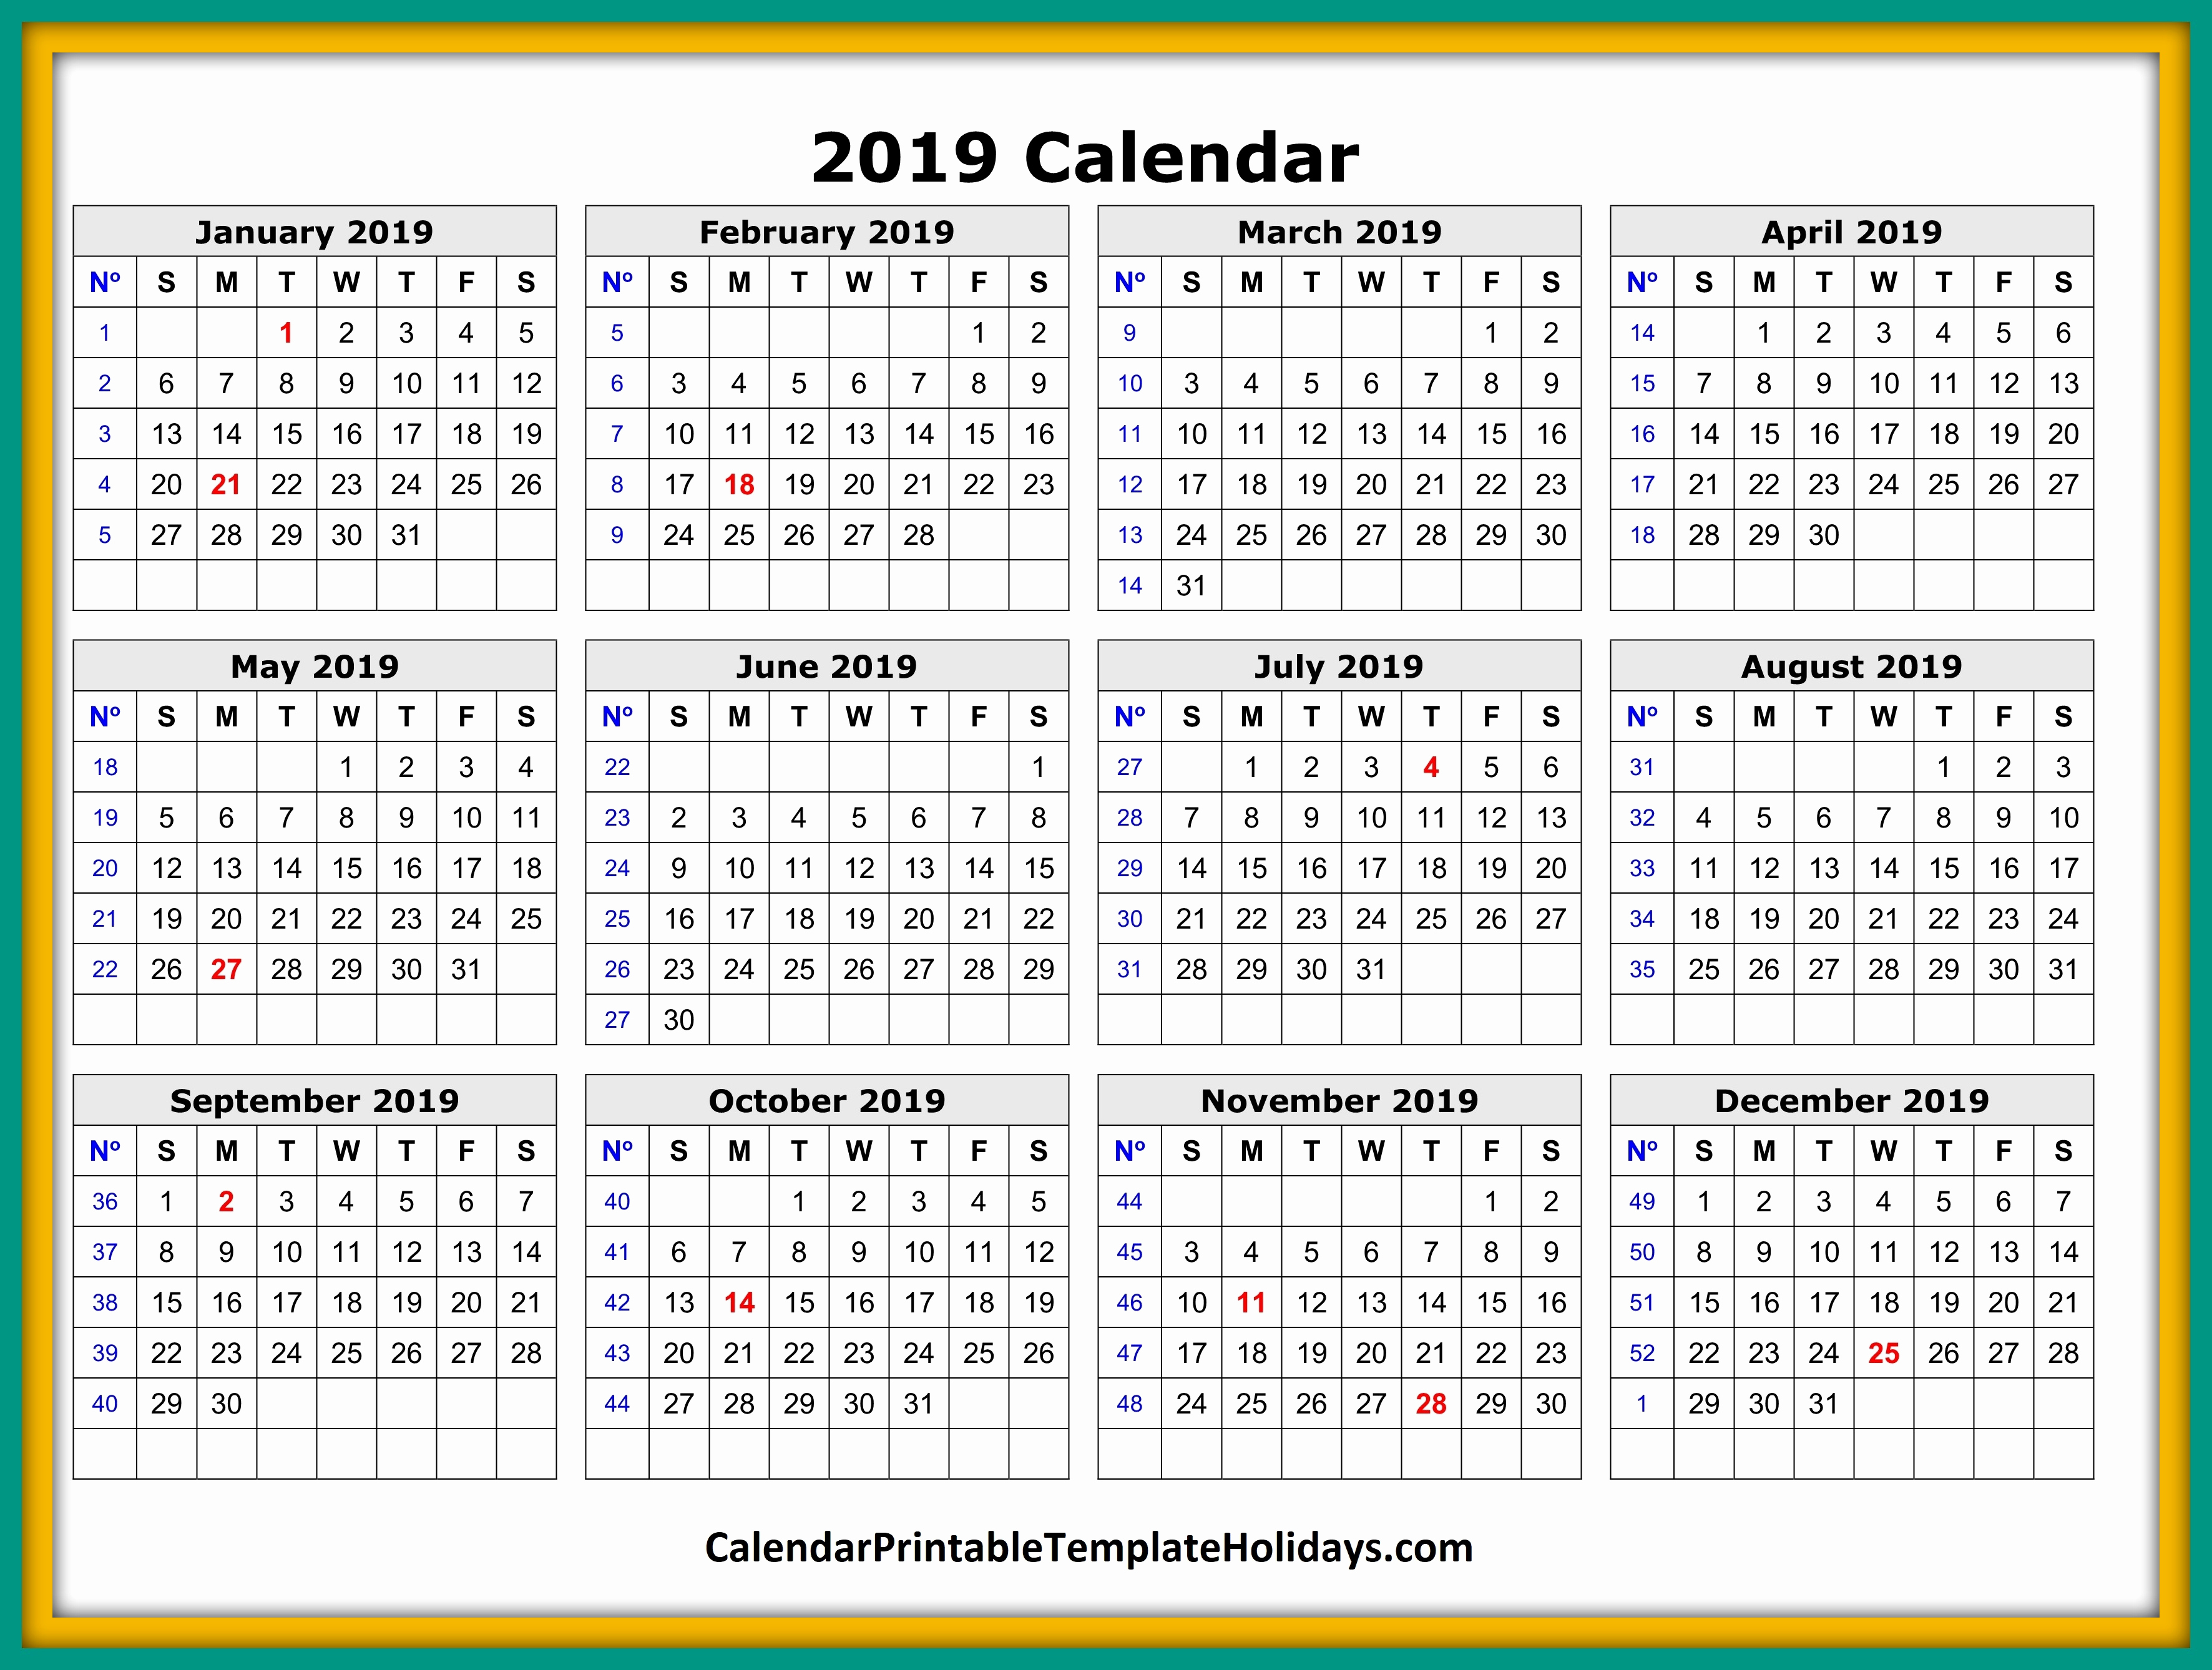 2019 Calendar Template Word Lovely 2019 Calendar Printable Template Holidays Pdf Word Excel